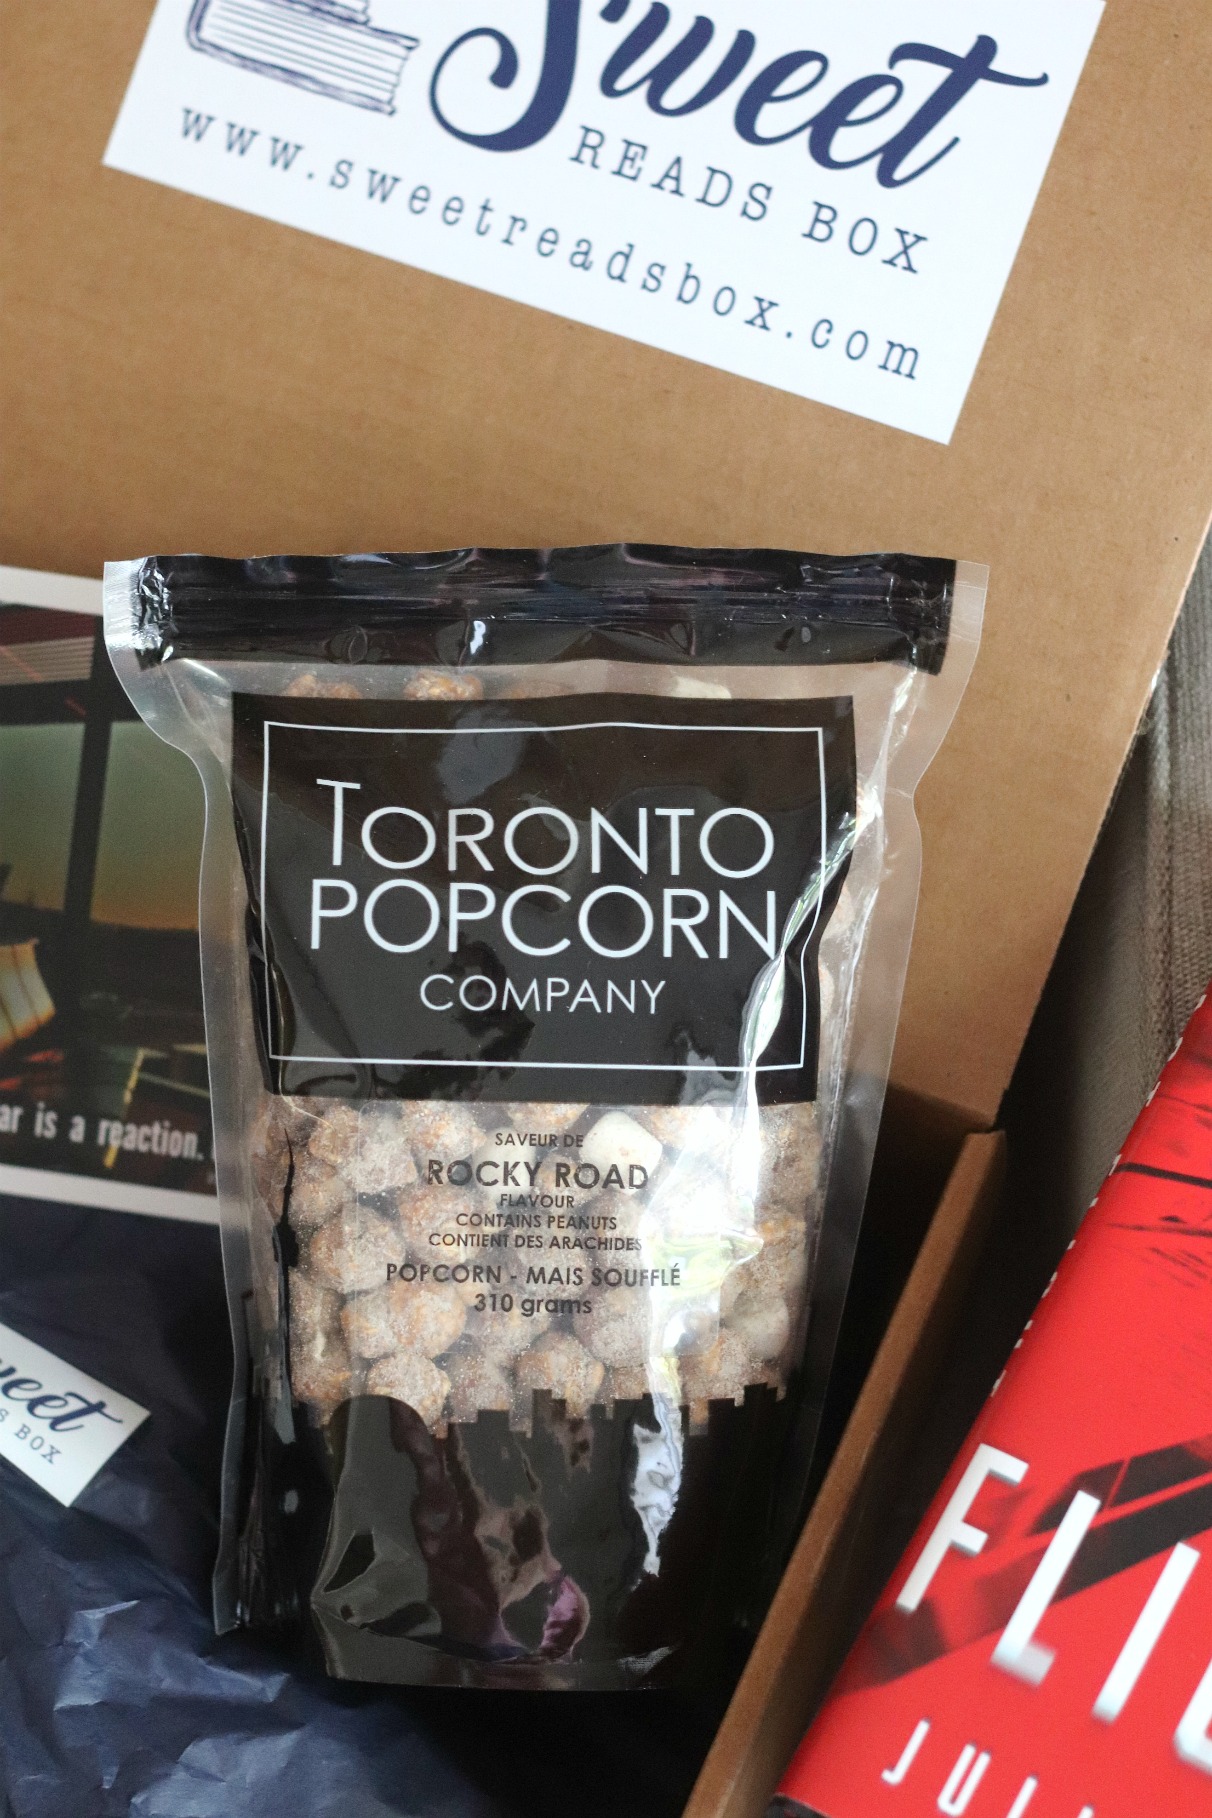 Sweet Reads Box July 2020 Toronto Popcorn Co Rocky Road popcorn